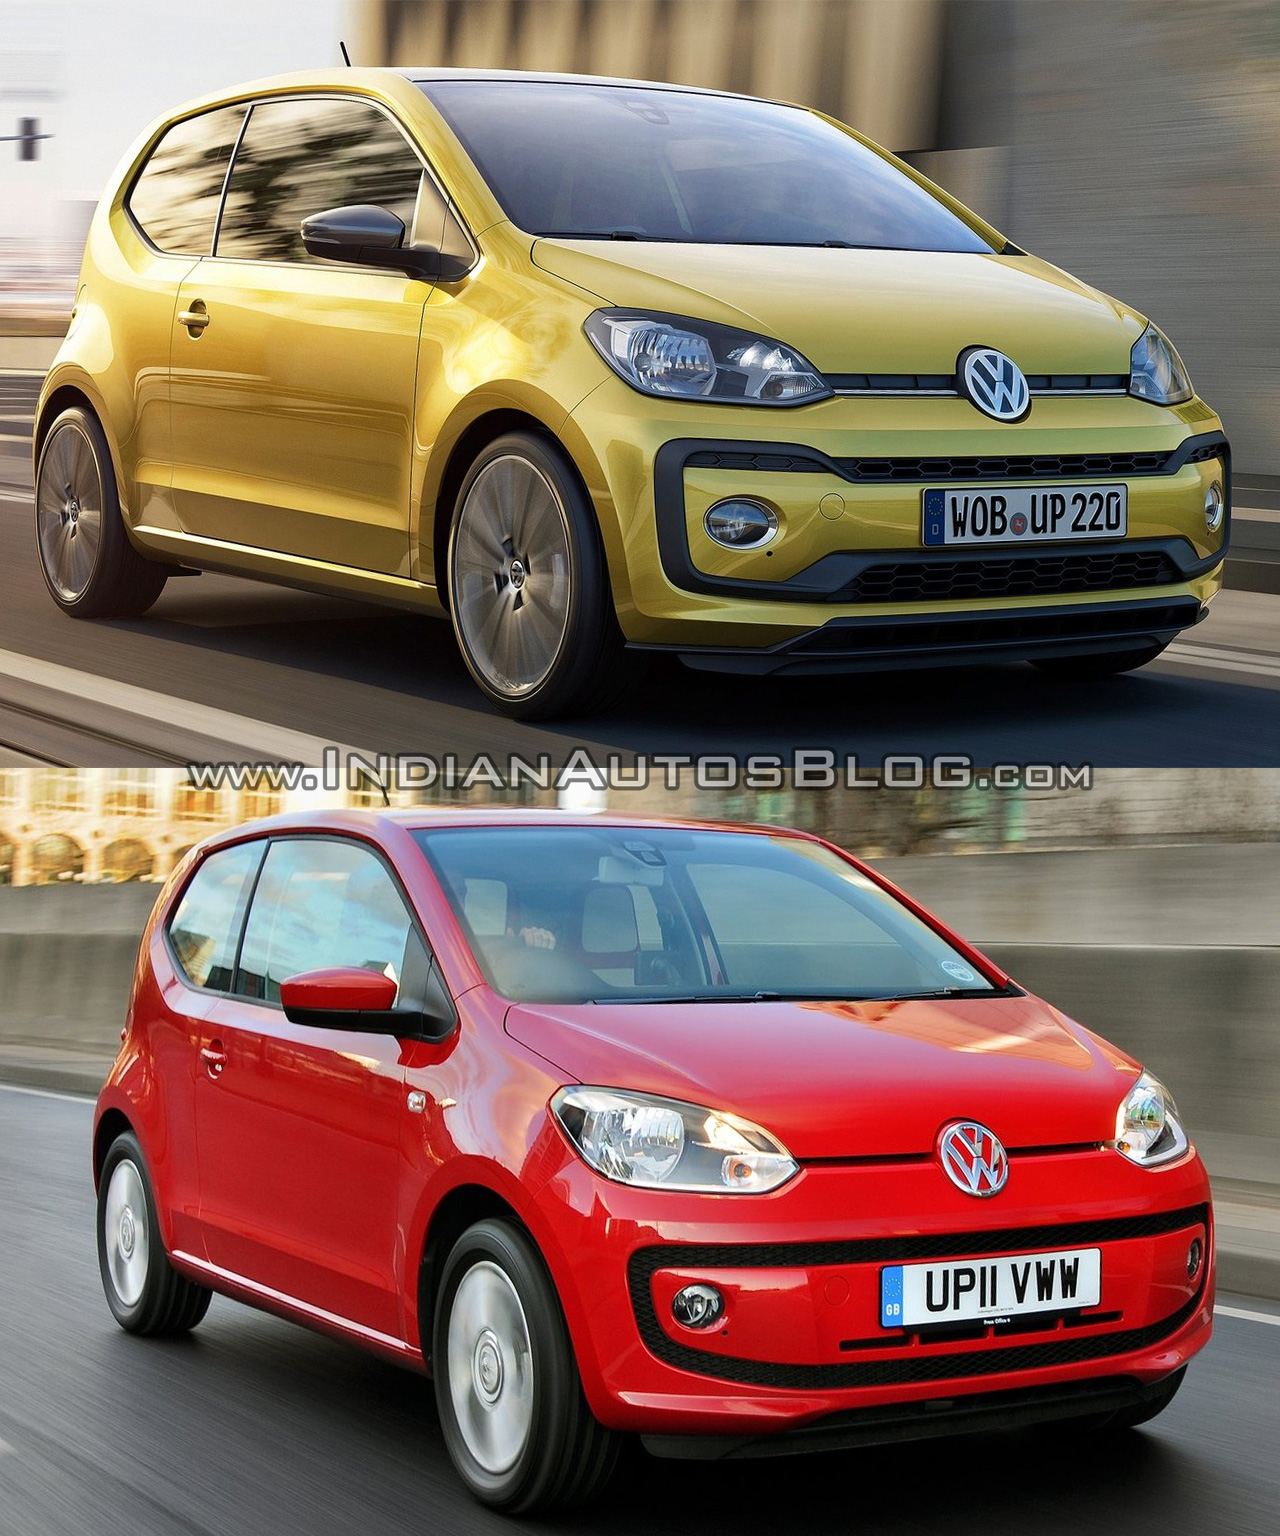 Comments on: 2016 VW Up! (facelift) vs pre-facelift model - Old vs. New